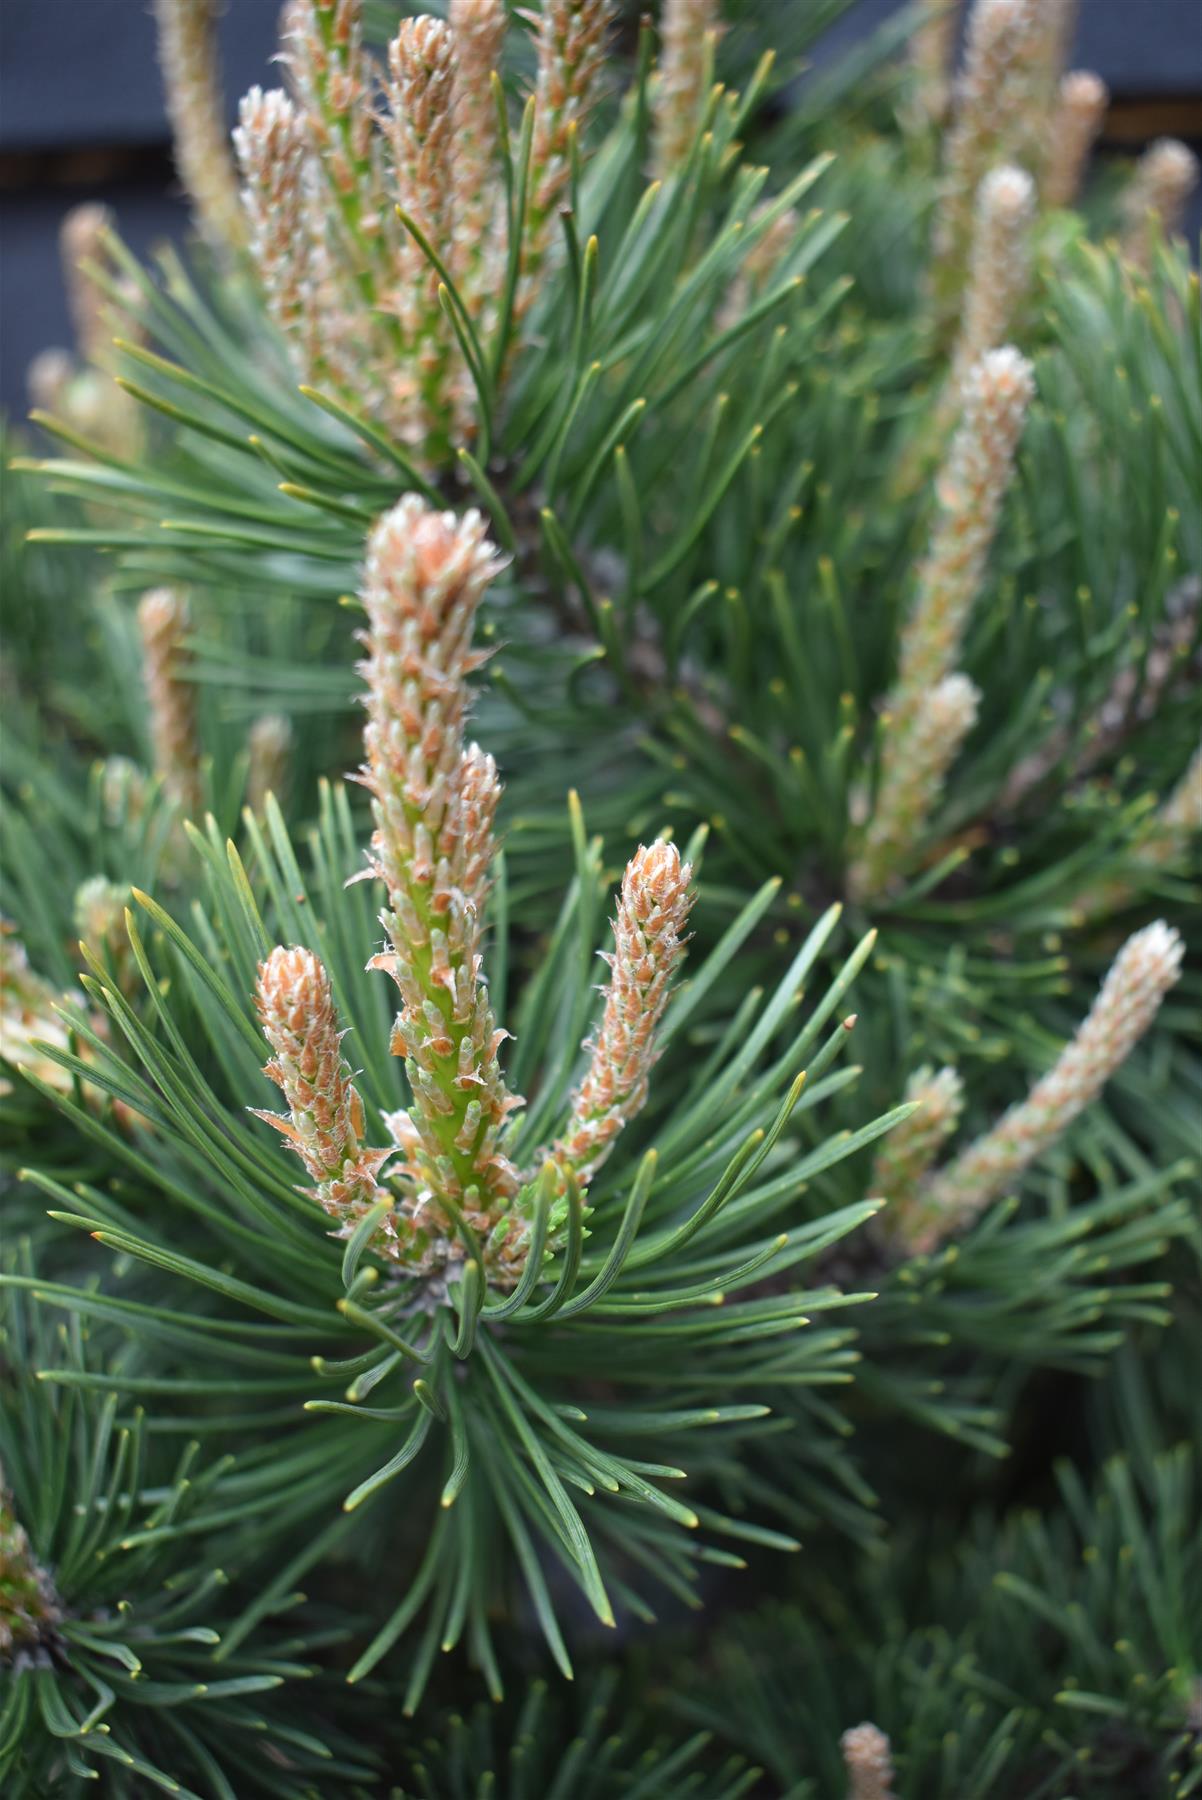 Pinus mugo 'Gnom' | Dwarf mountain pine - Height 55-65cm - Width 40-50cm - 11lt